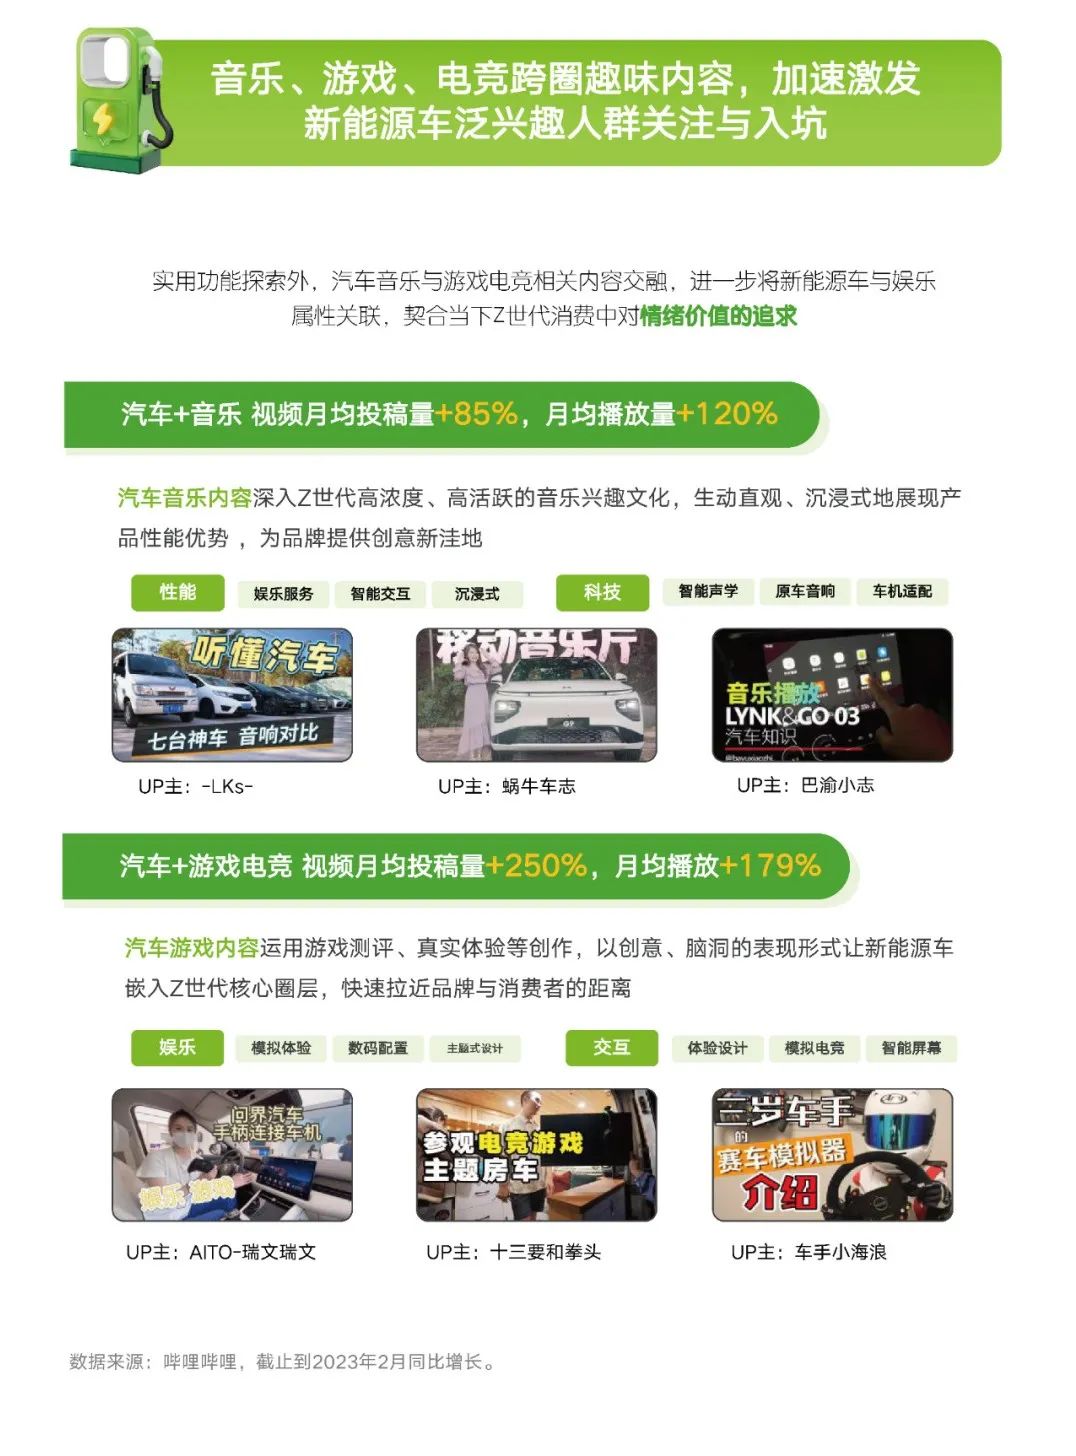 Z世代新能源汽车兴趣洞察报告发布，2023ChinaJoy 助力车企抢占“智能出行”新赛道!